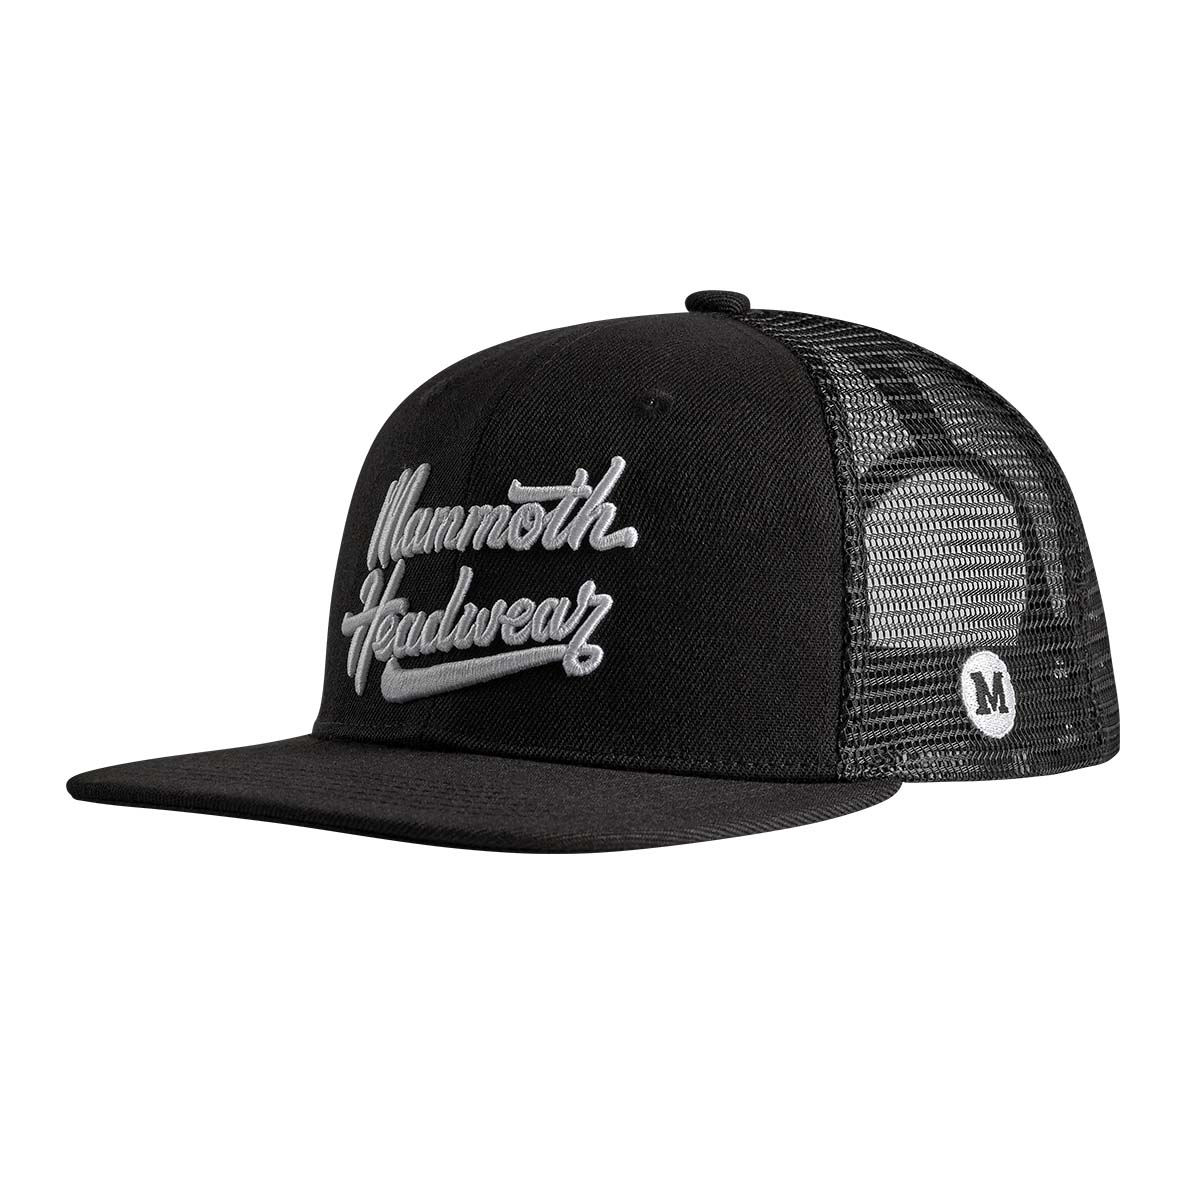 Men's Woolly Mammoth Hat - Black XL/2XL Duluth Trading Company